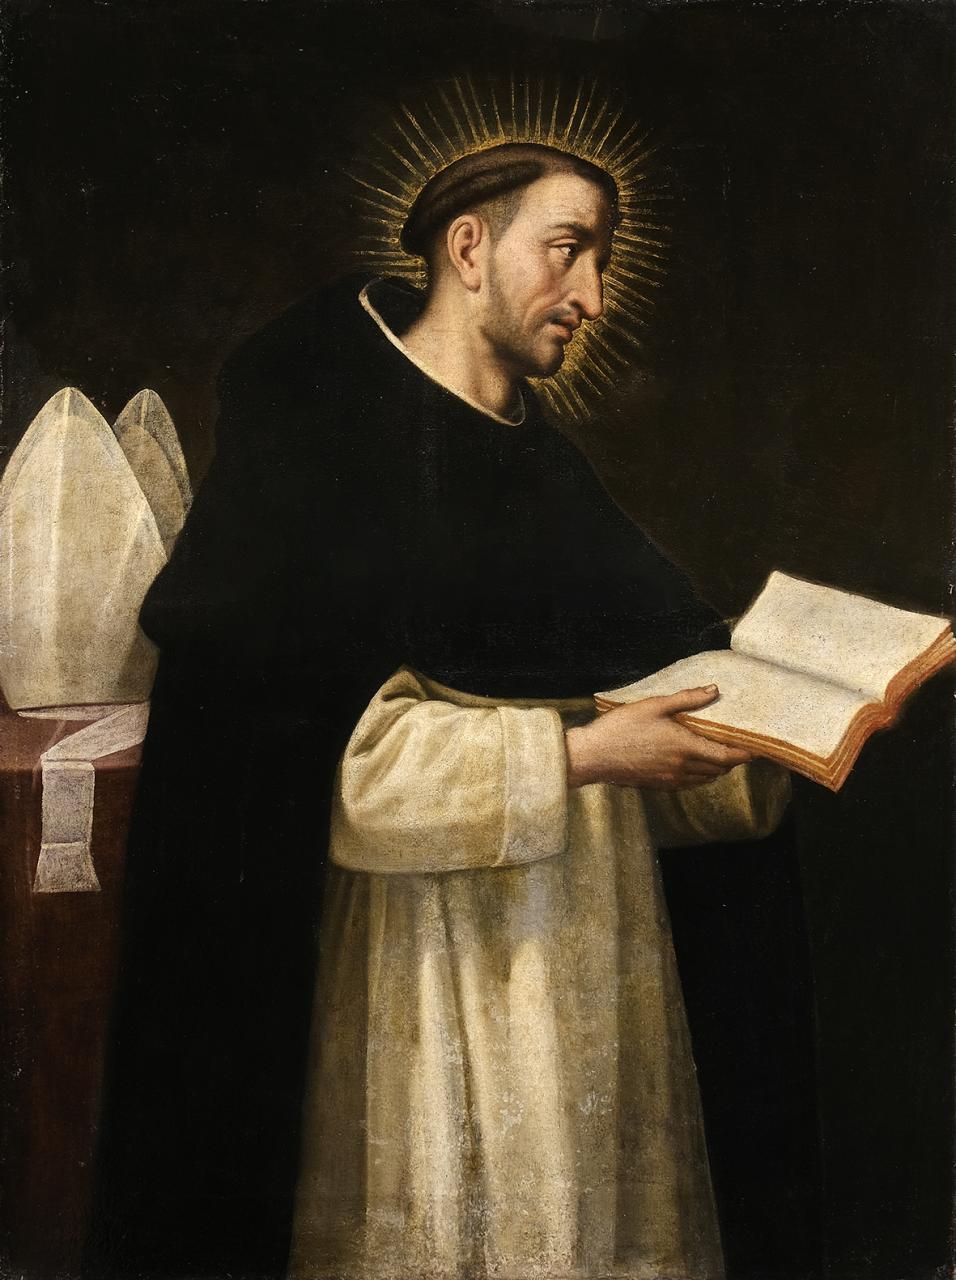 ESCUELA ESPAÑOLA, Fns. S. XVII Probably St. Thomas Aquinas
Oil on canvas
134 x 1&hellip;